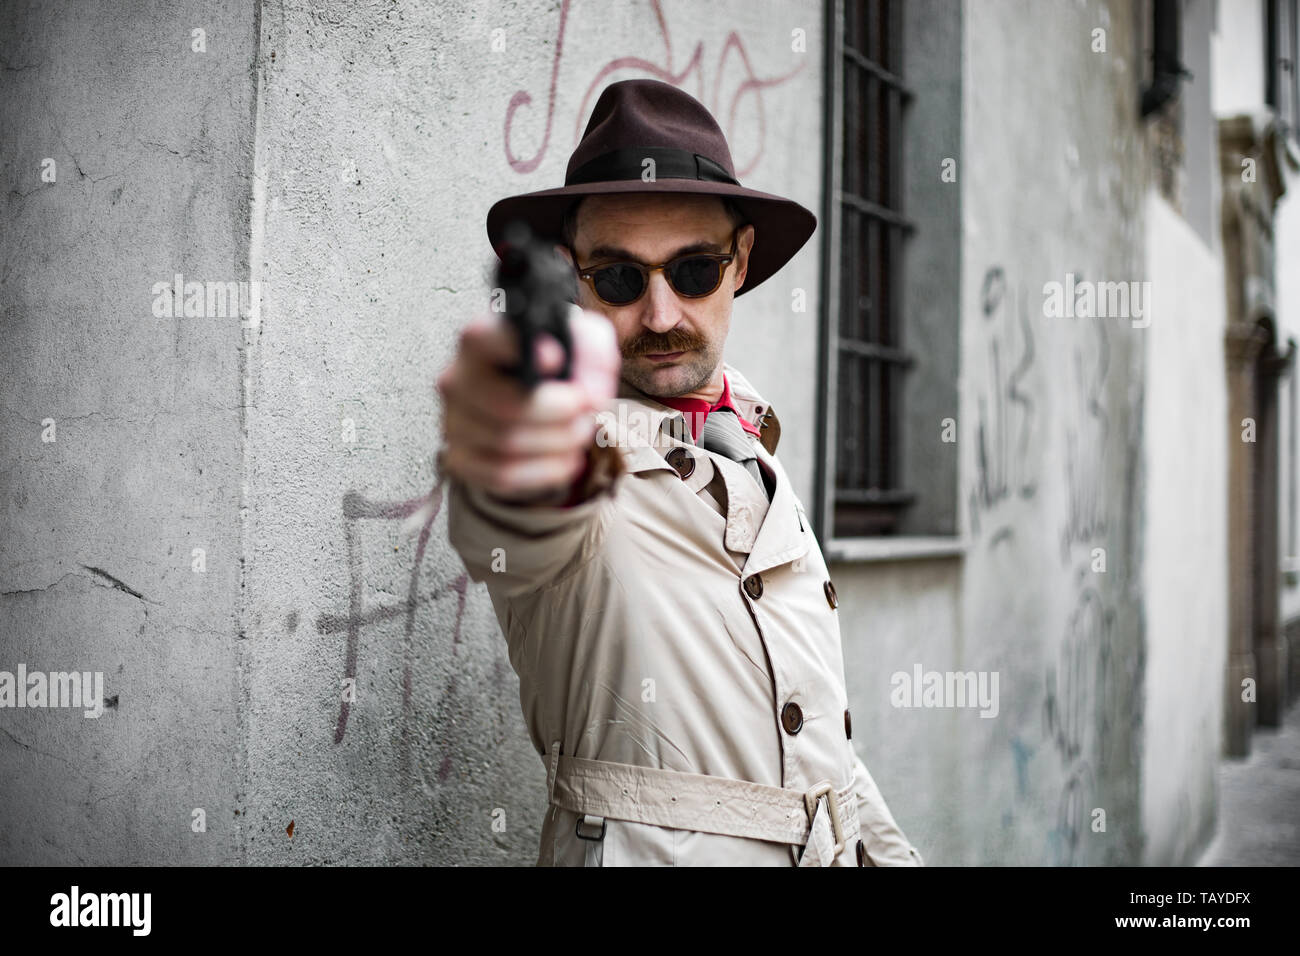 Hitman pointing the gun to the camera, execution concept Stock Photo